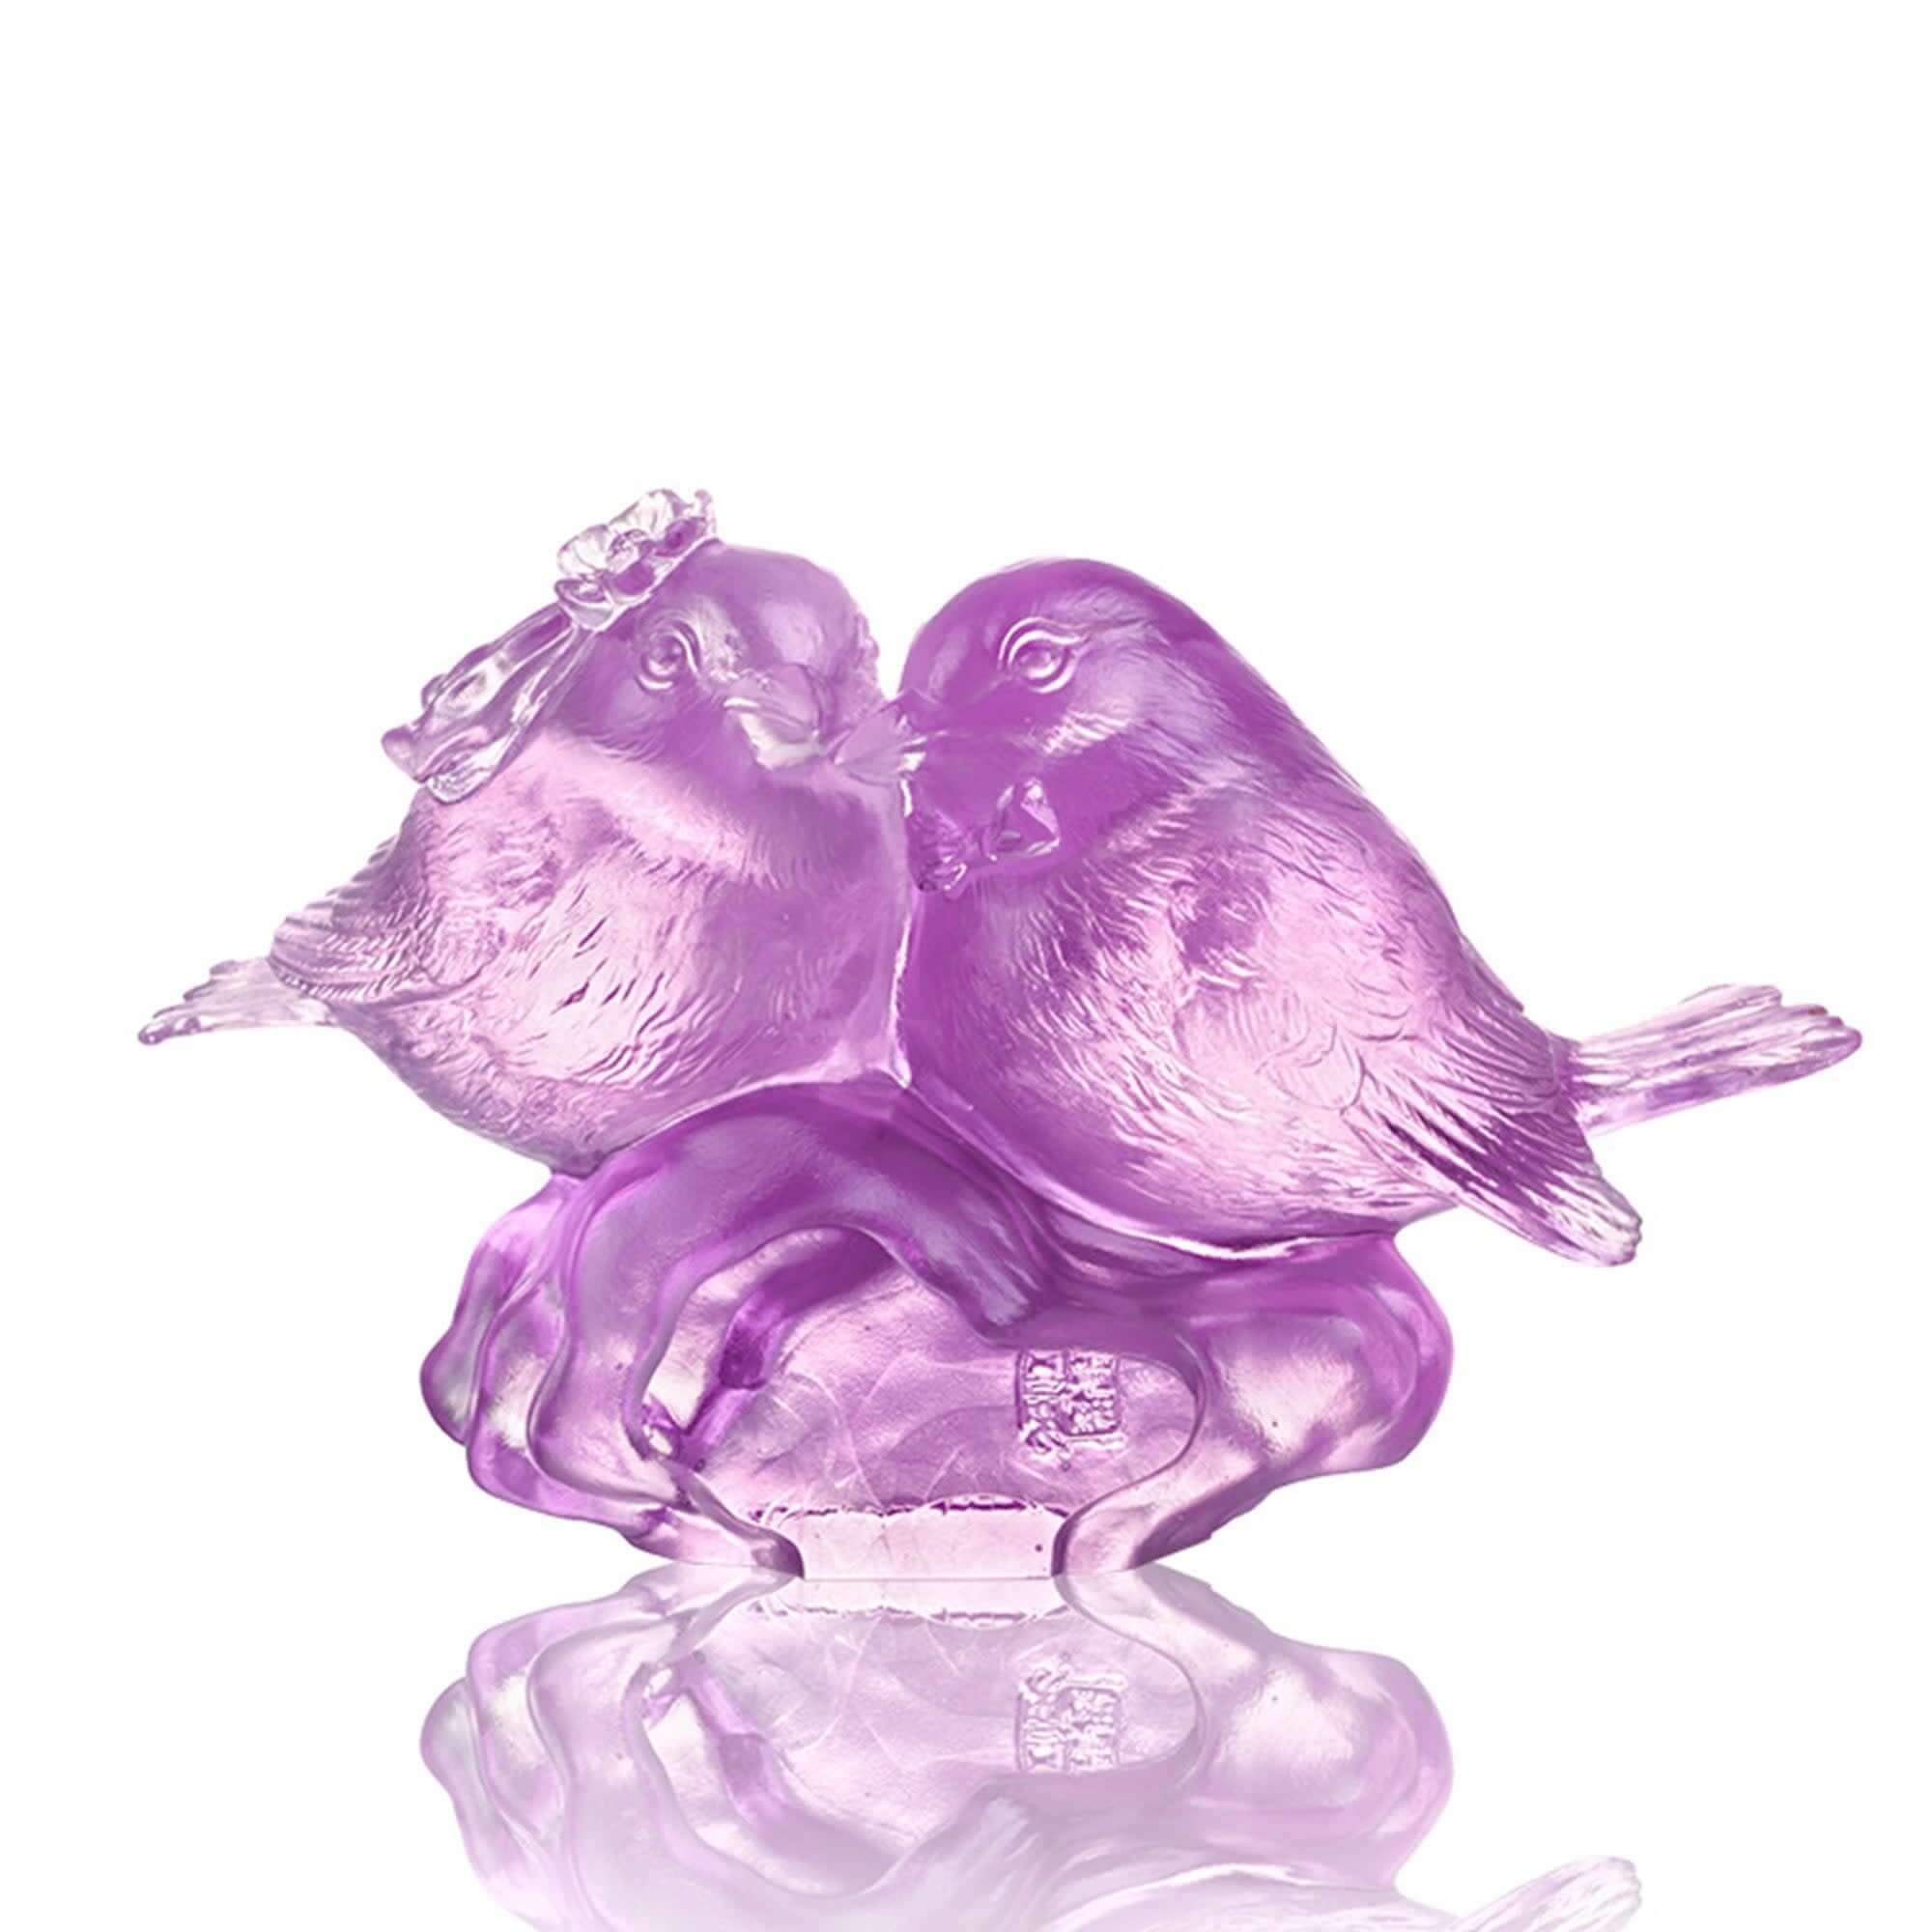 LIULI Crystal Art Crystal Bird Sculpture, "Our Happiness"